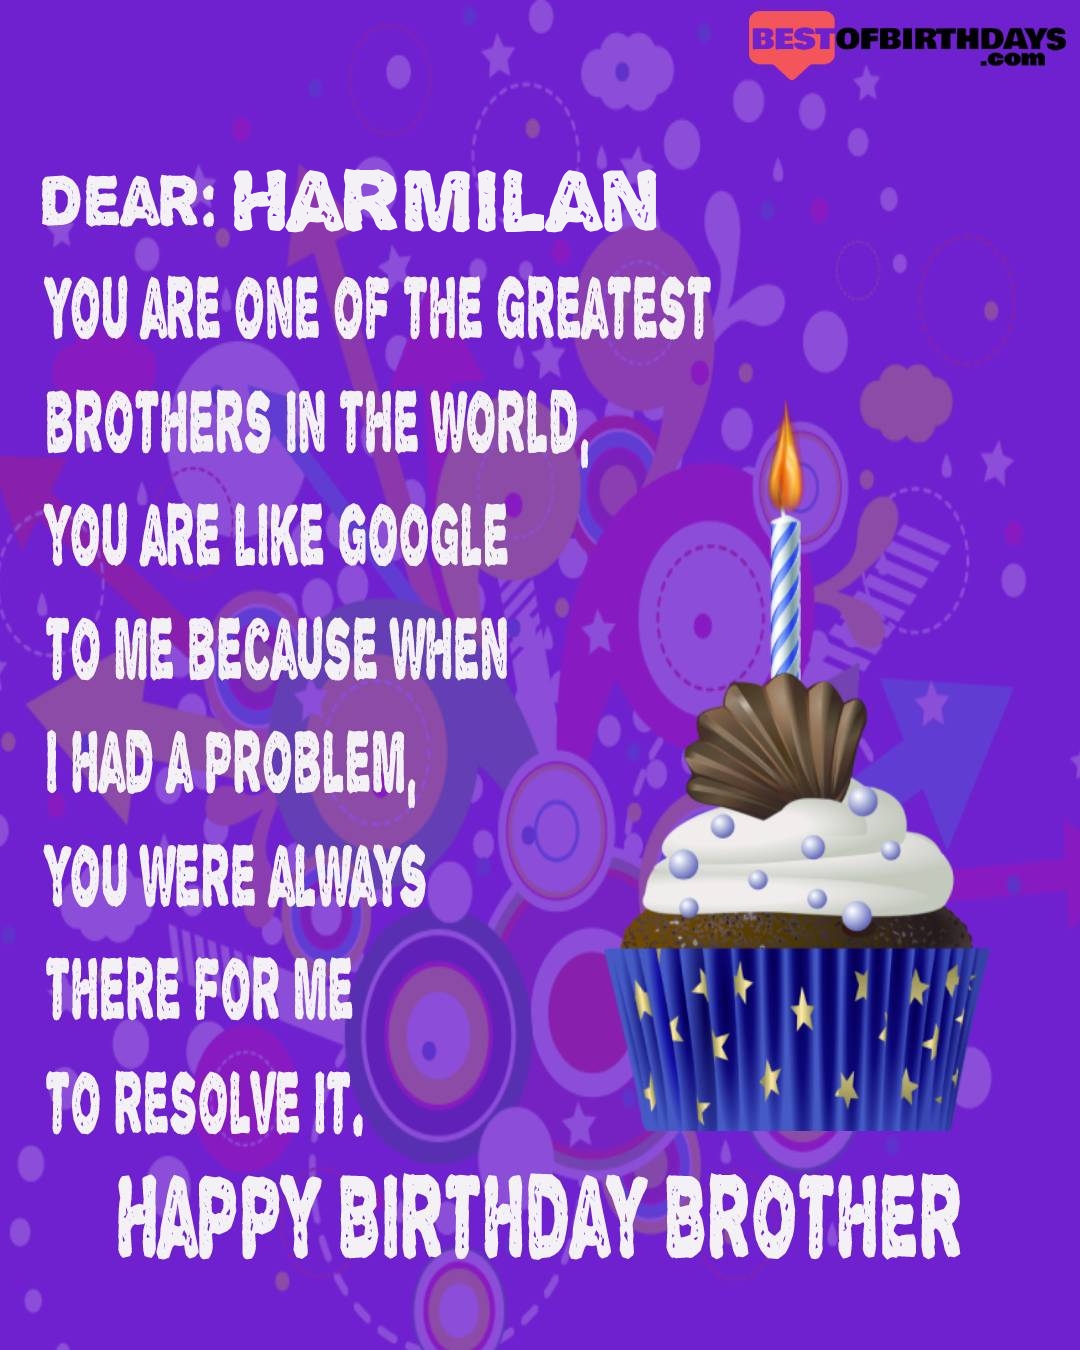 Happy birthday harmilan bhai brother bro